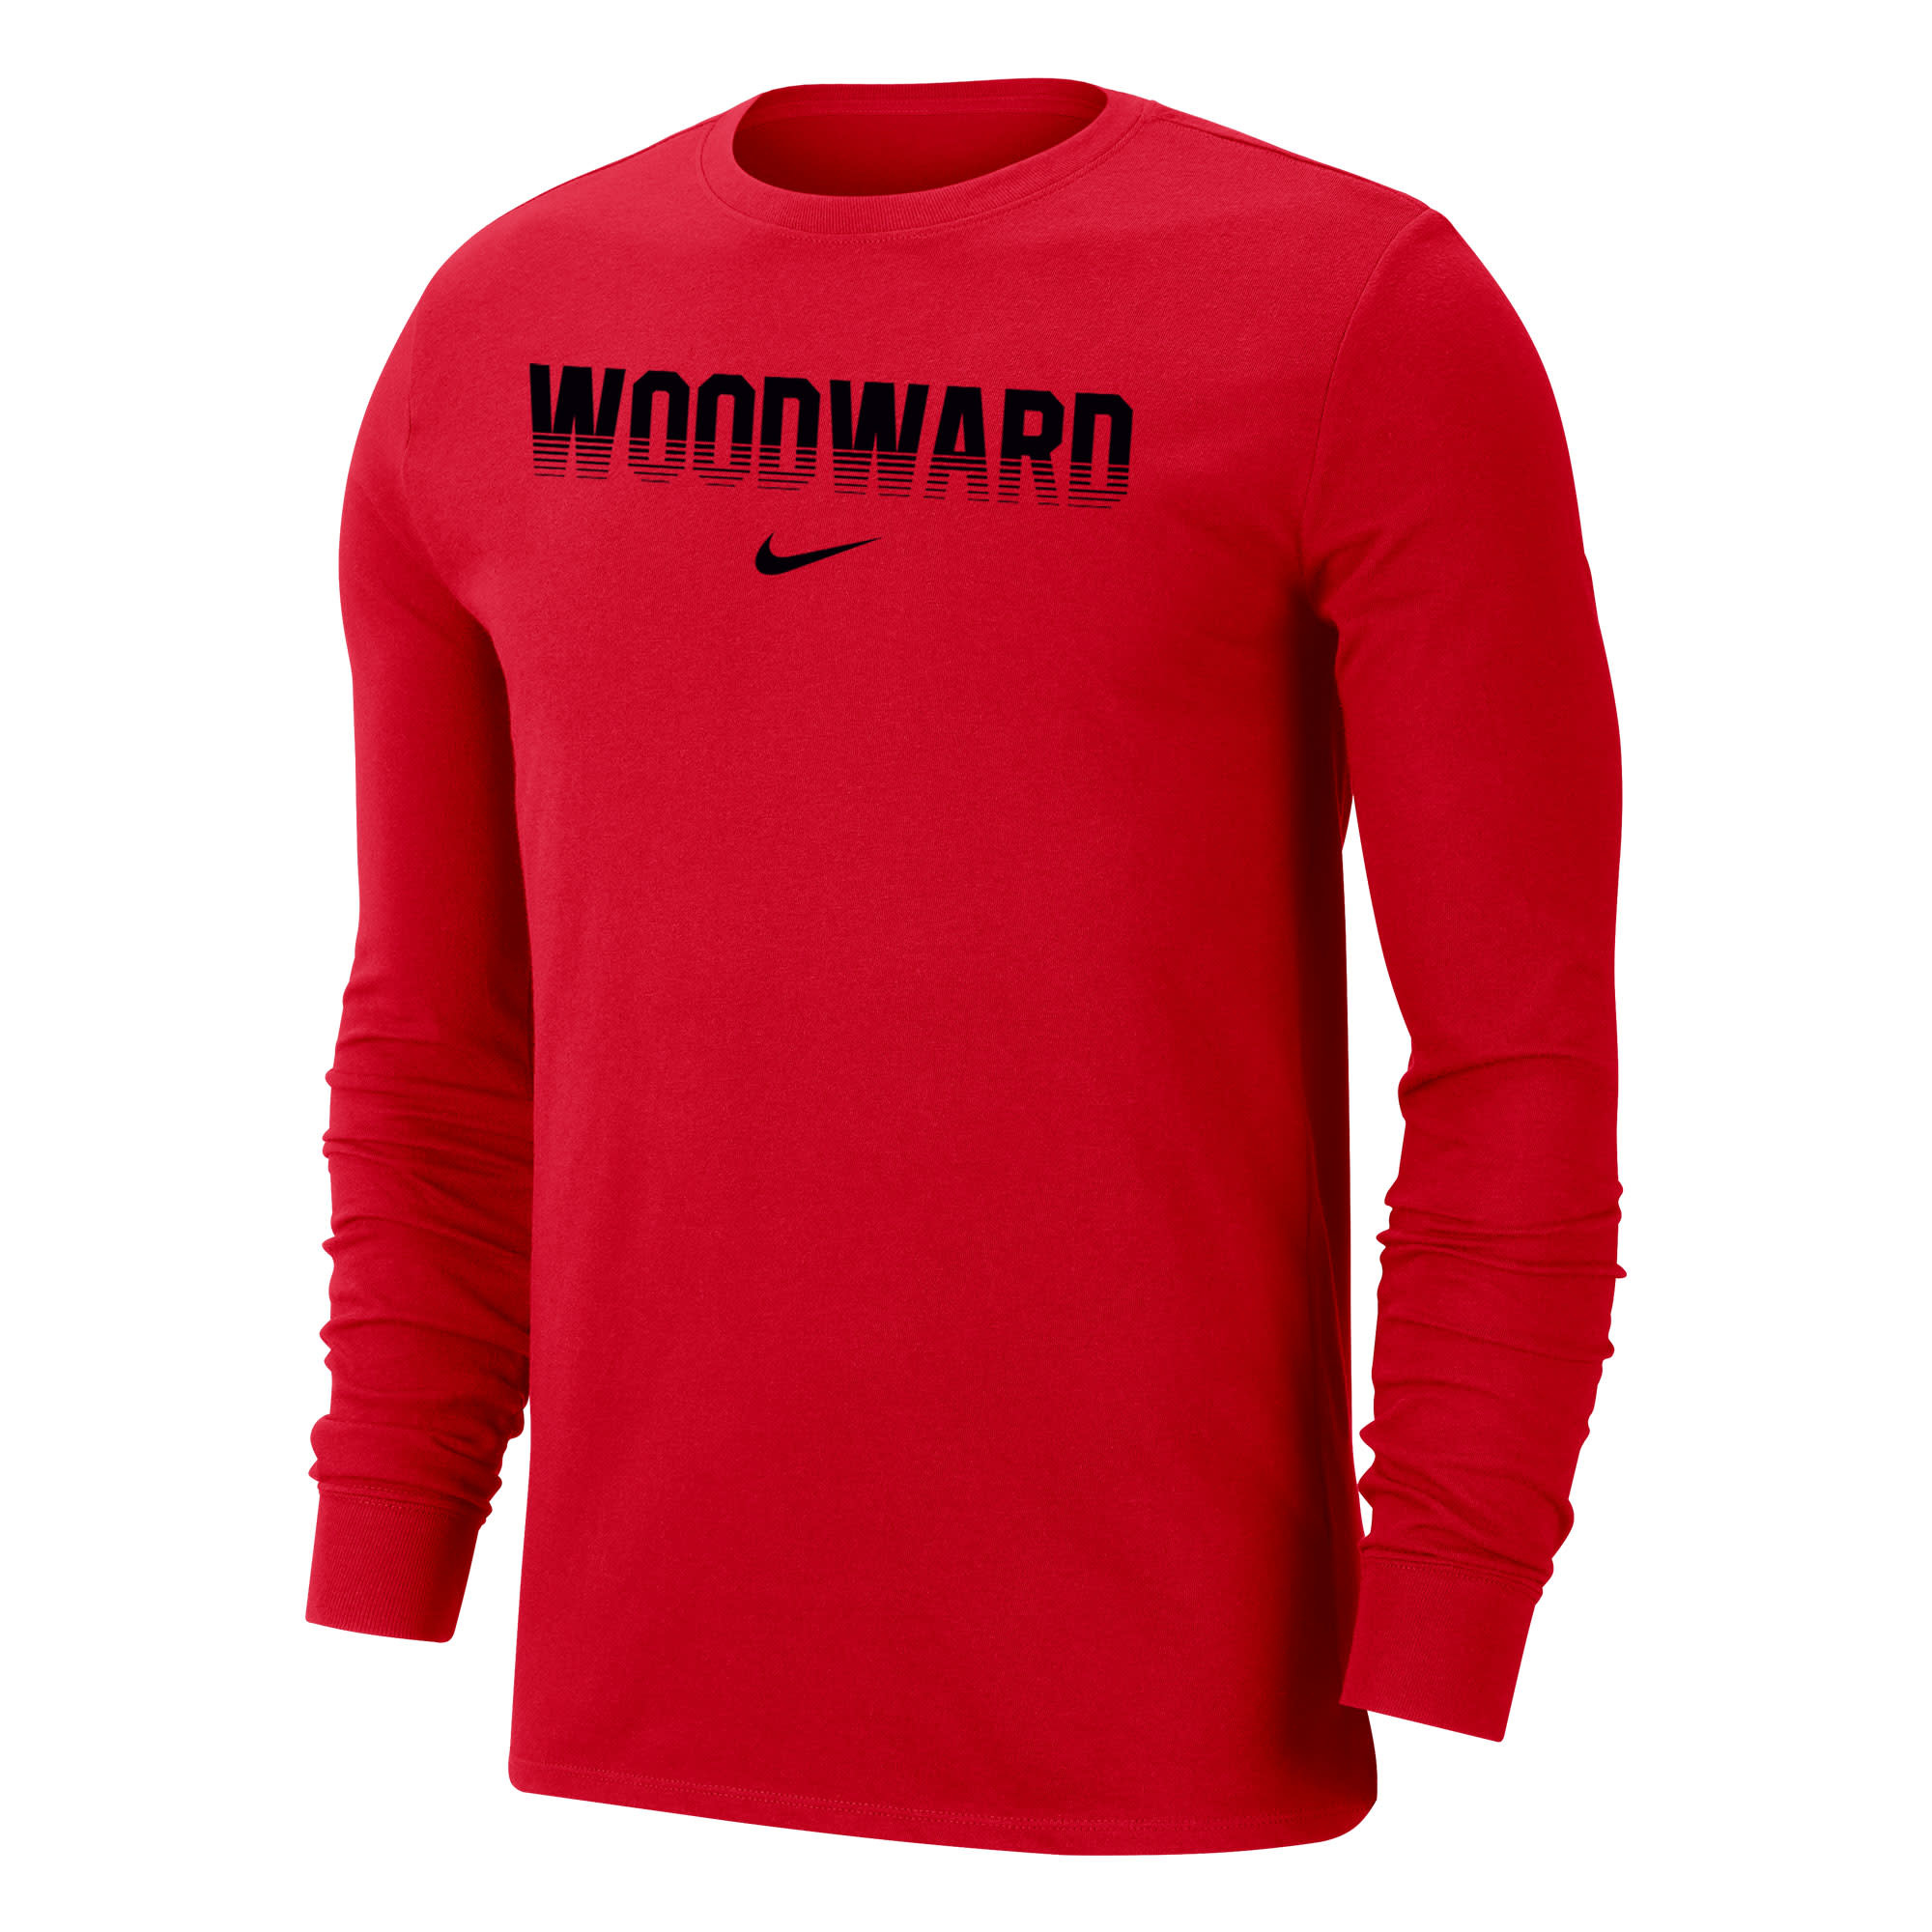 Woodward DFC Stripes Swoosh Long Sleeve Shirt - Woodward Academy